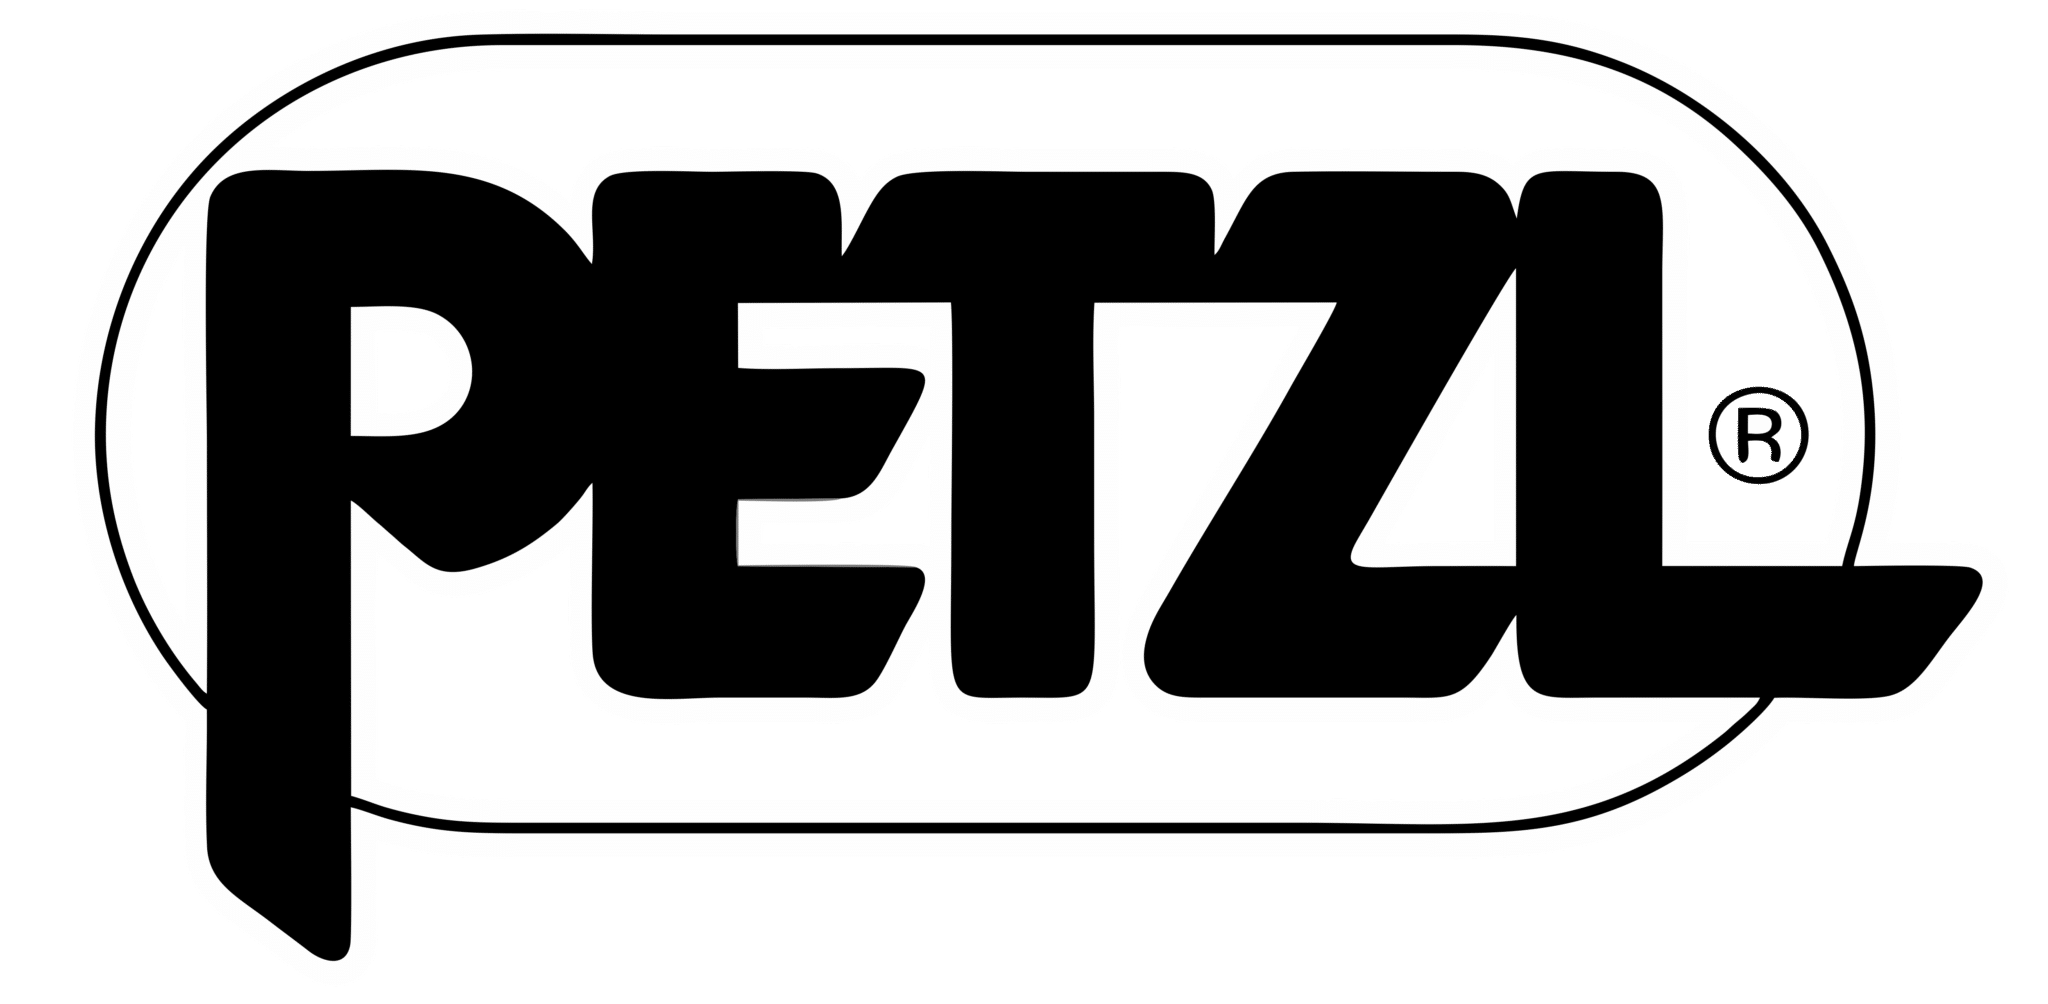 Petzl_logo